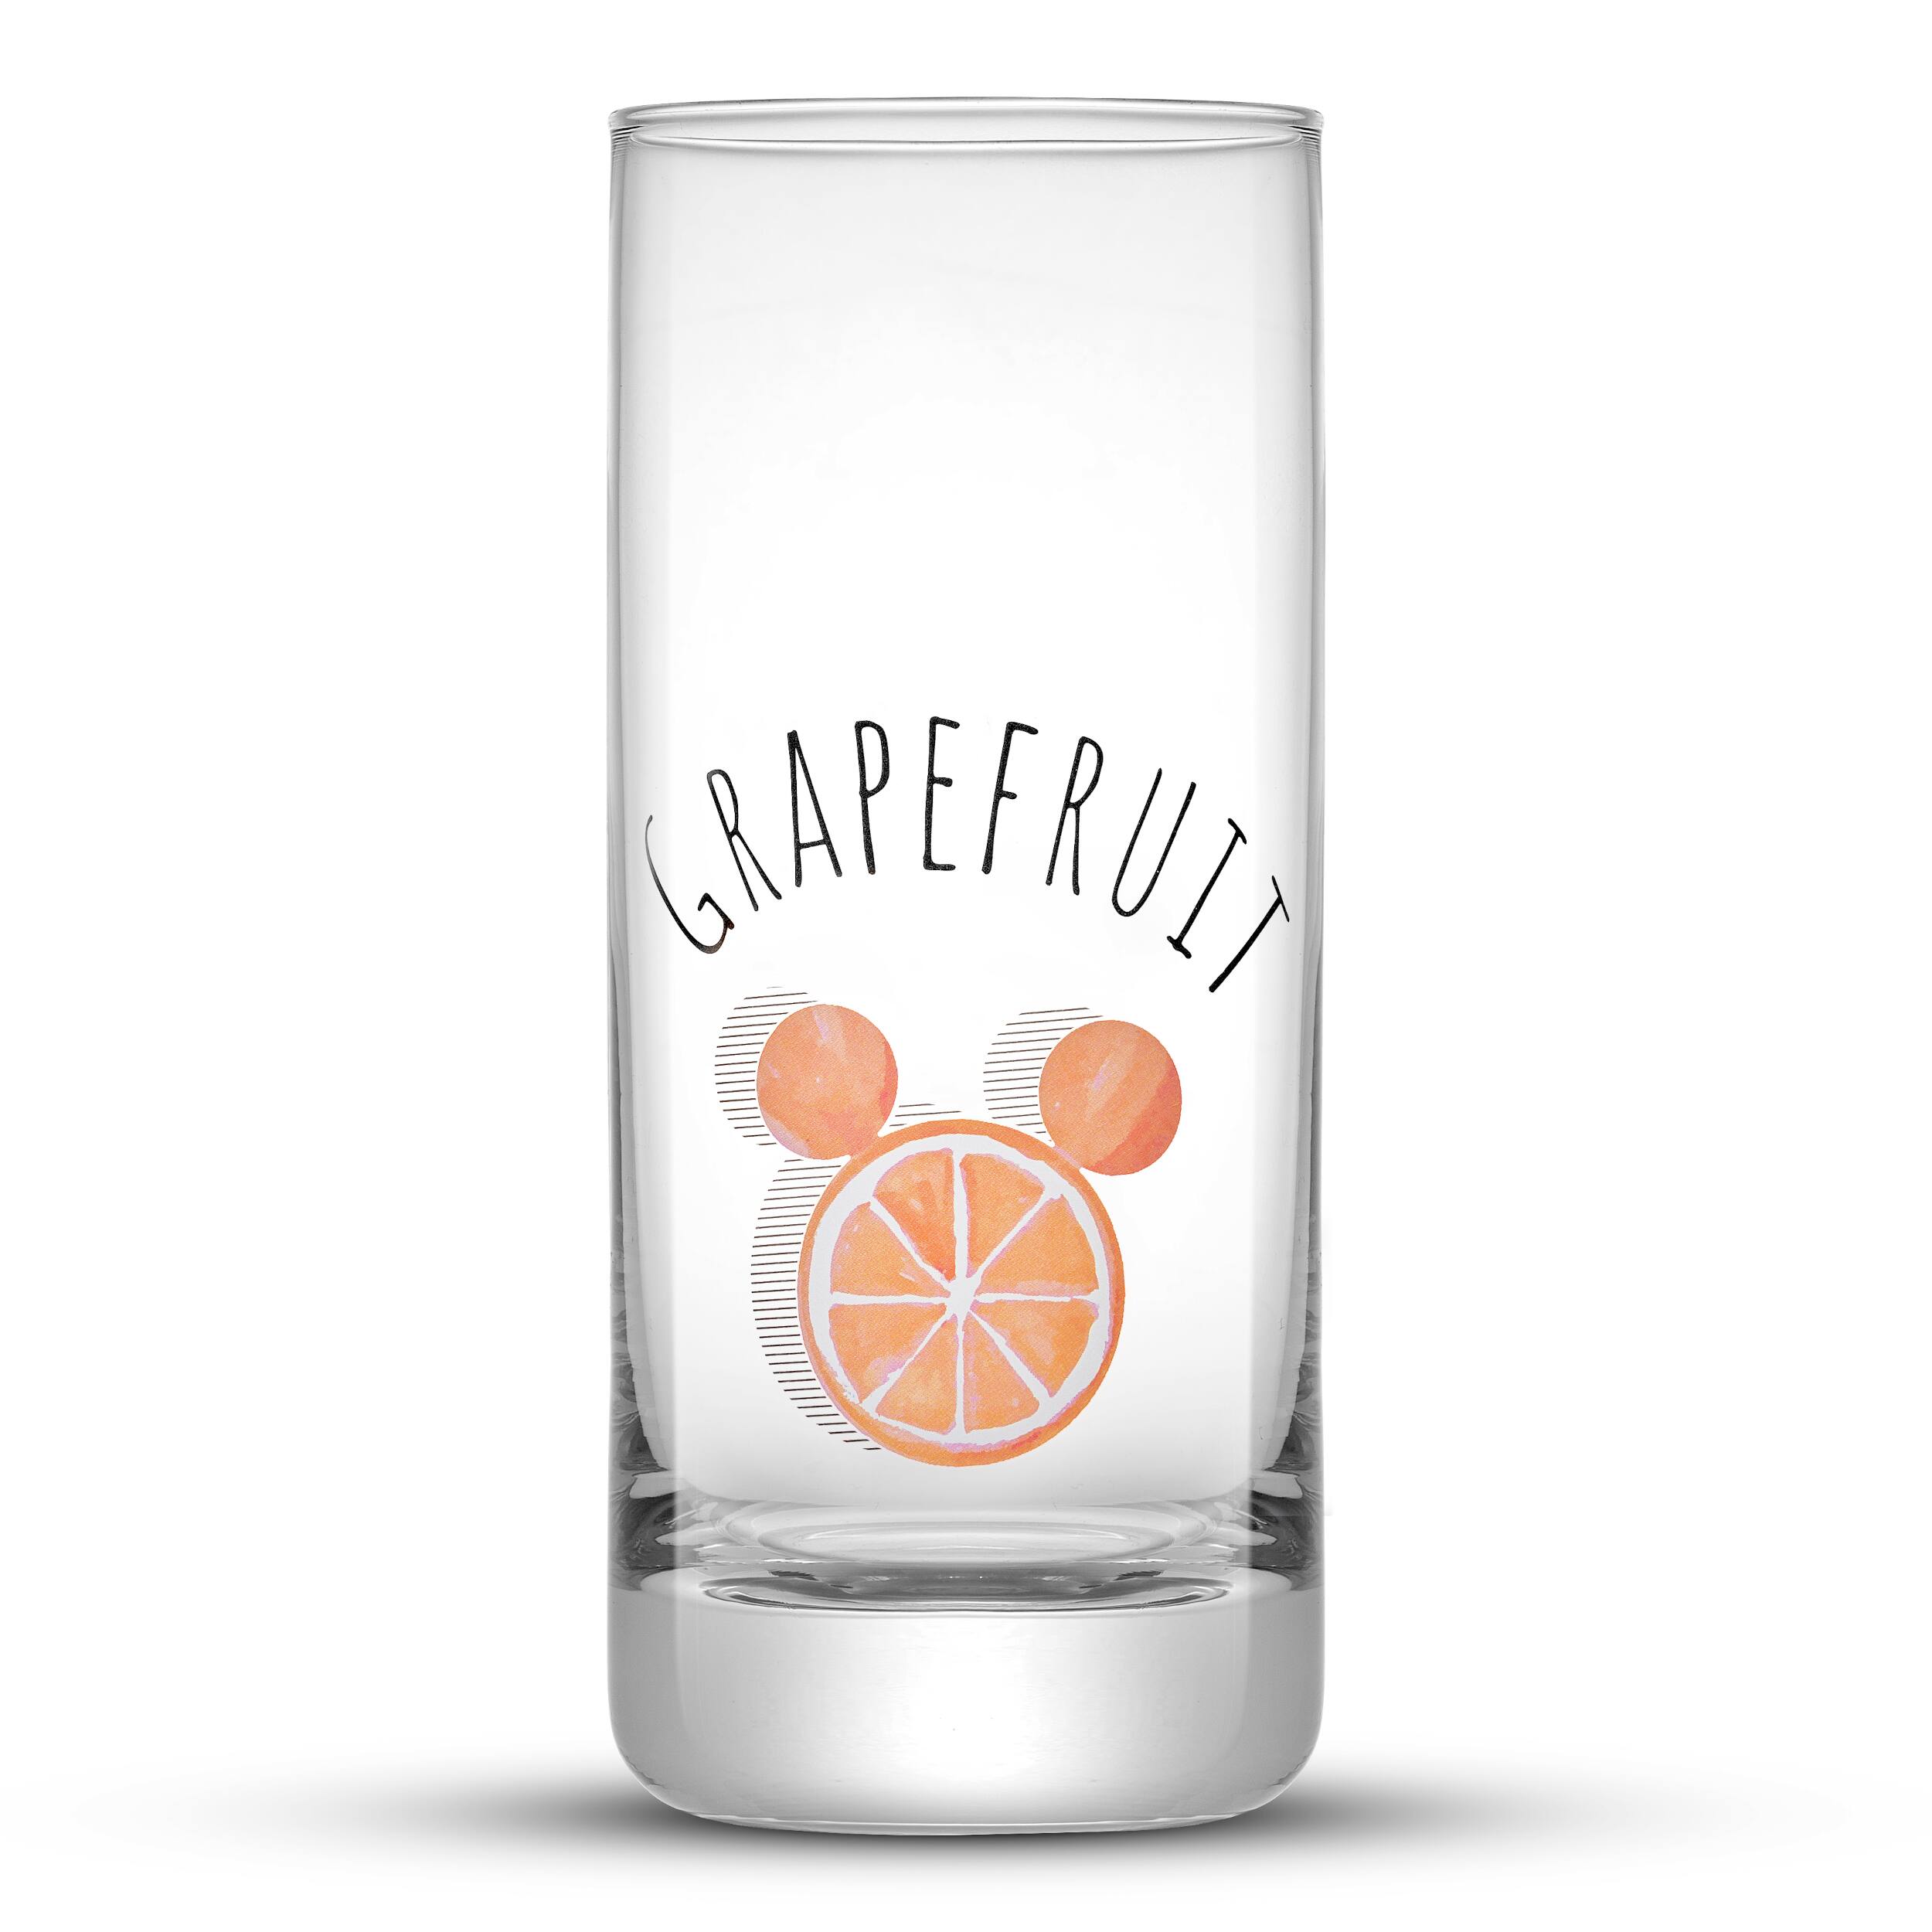 JoyJolt 10 oz. Disney Mickey Mouse Citrus Short Drinking Glass (Set of 4)  JDS10742 - The Home Depot